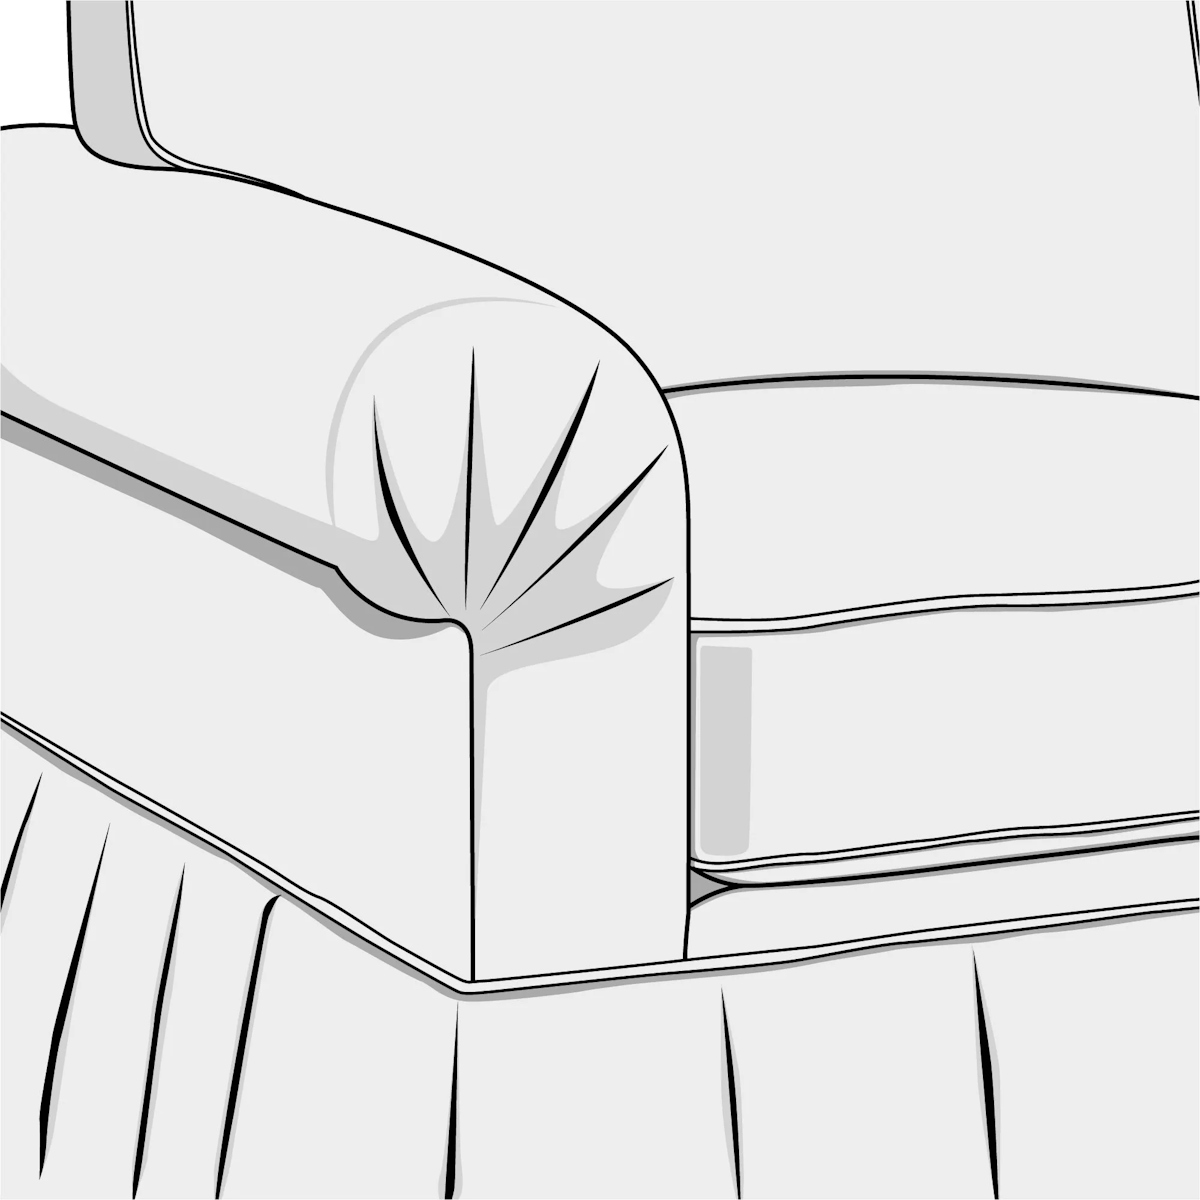 Illustration of pleated arm style sofa